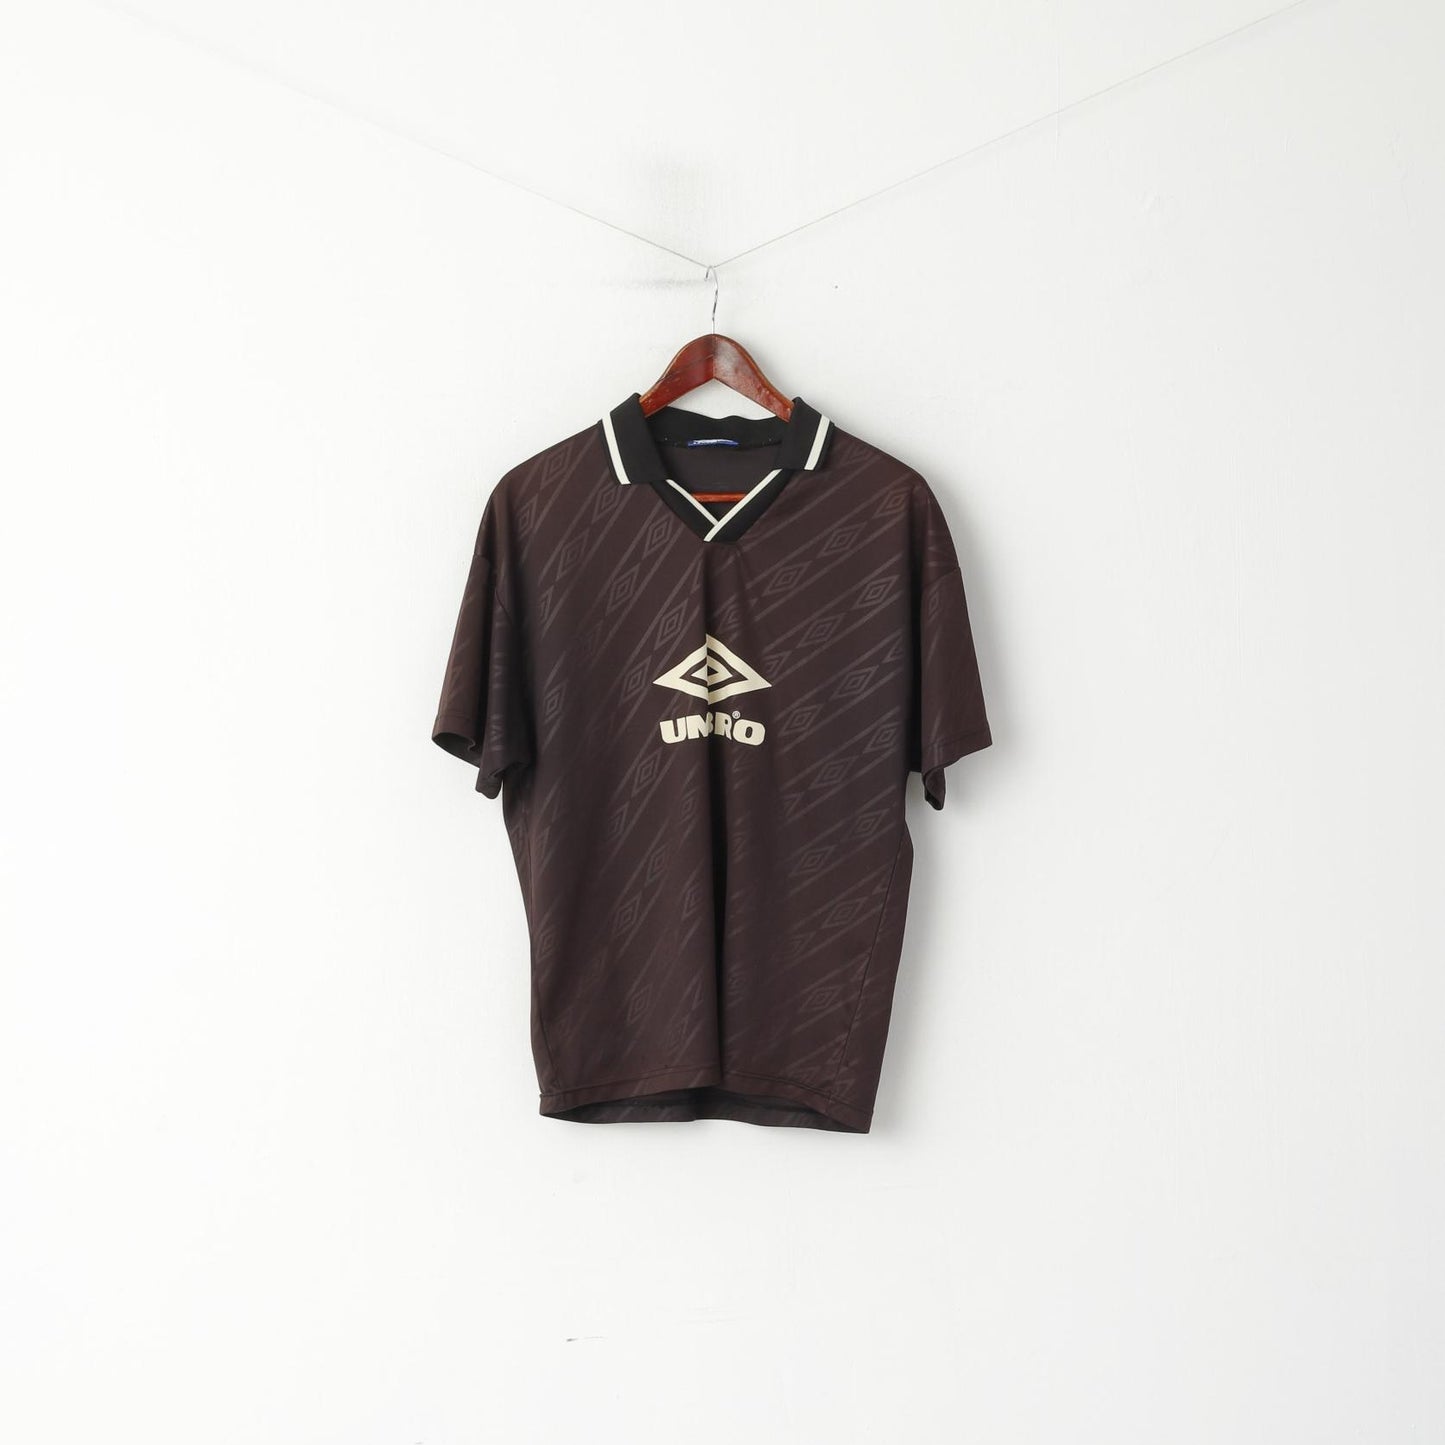 Umbro Men M Polo Shirt Brown Striped Shiny Vintage Sport Football Training Jersey Top